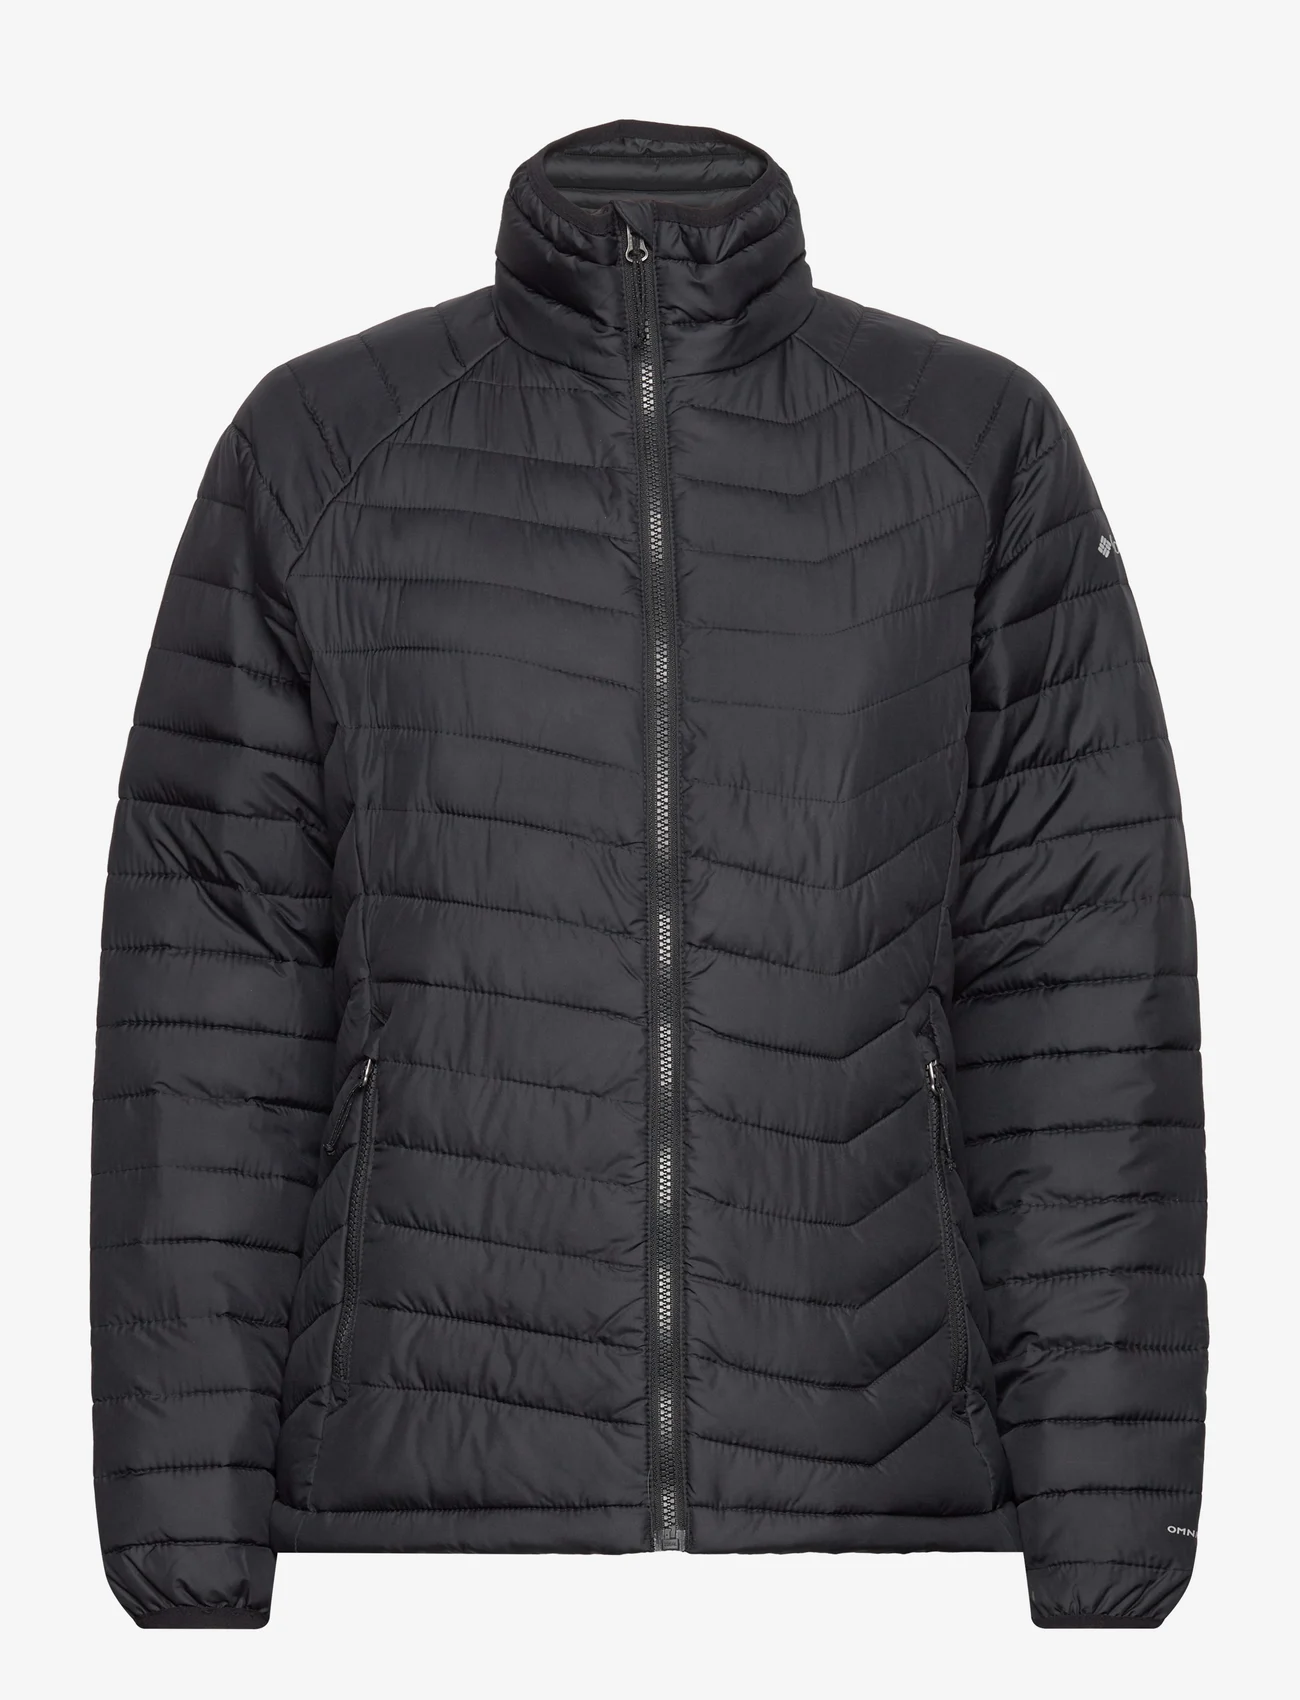 Columbia Sportswear - Powder Lite Jacket - toppatakit - black - 0